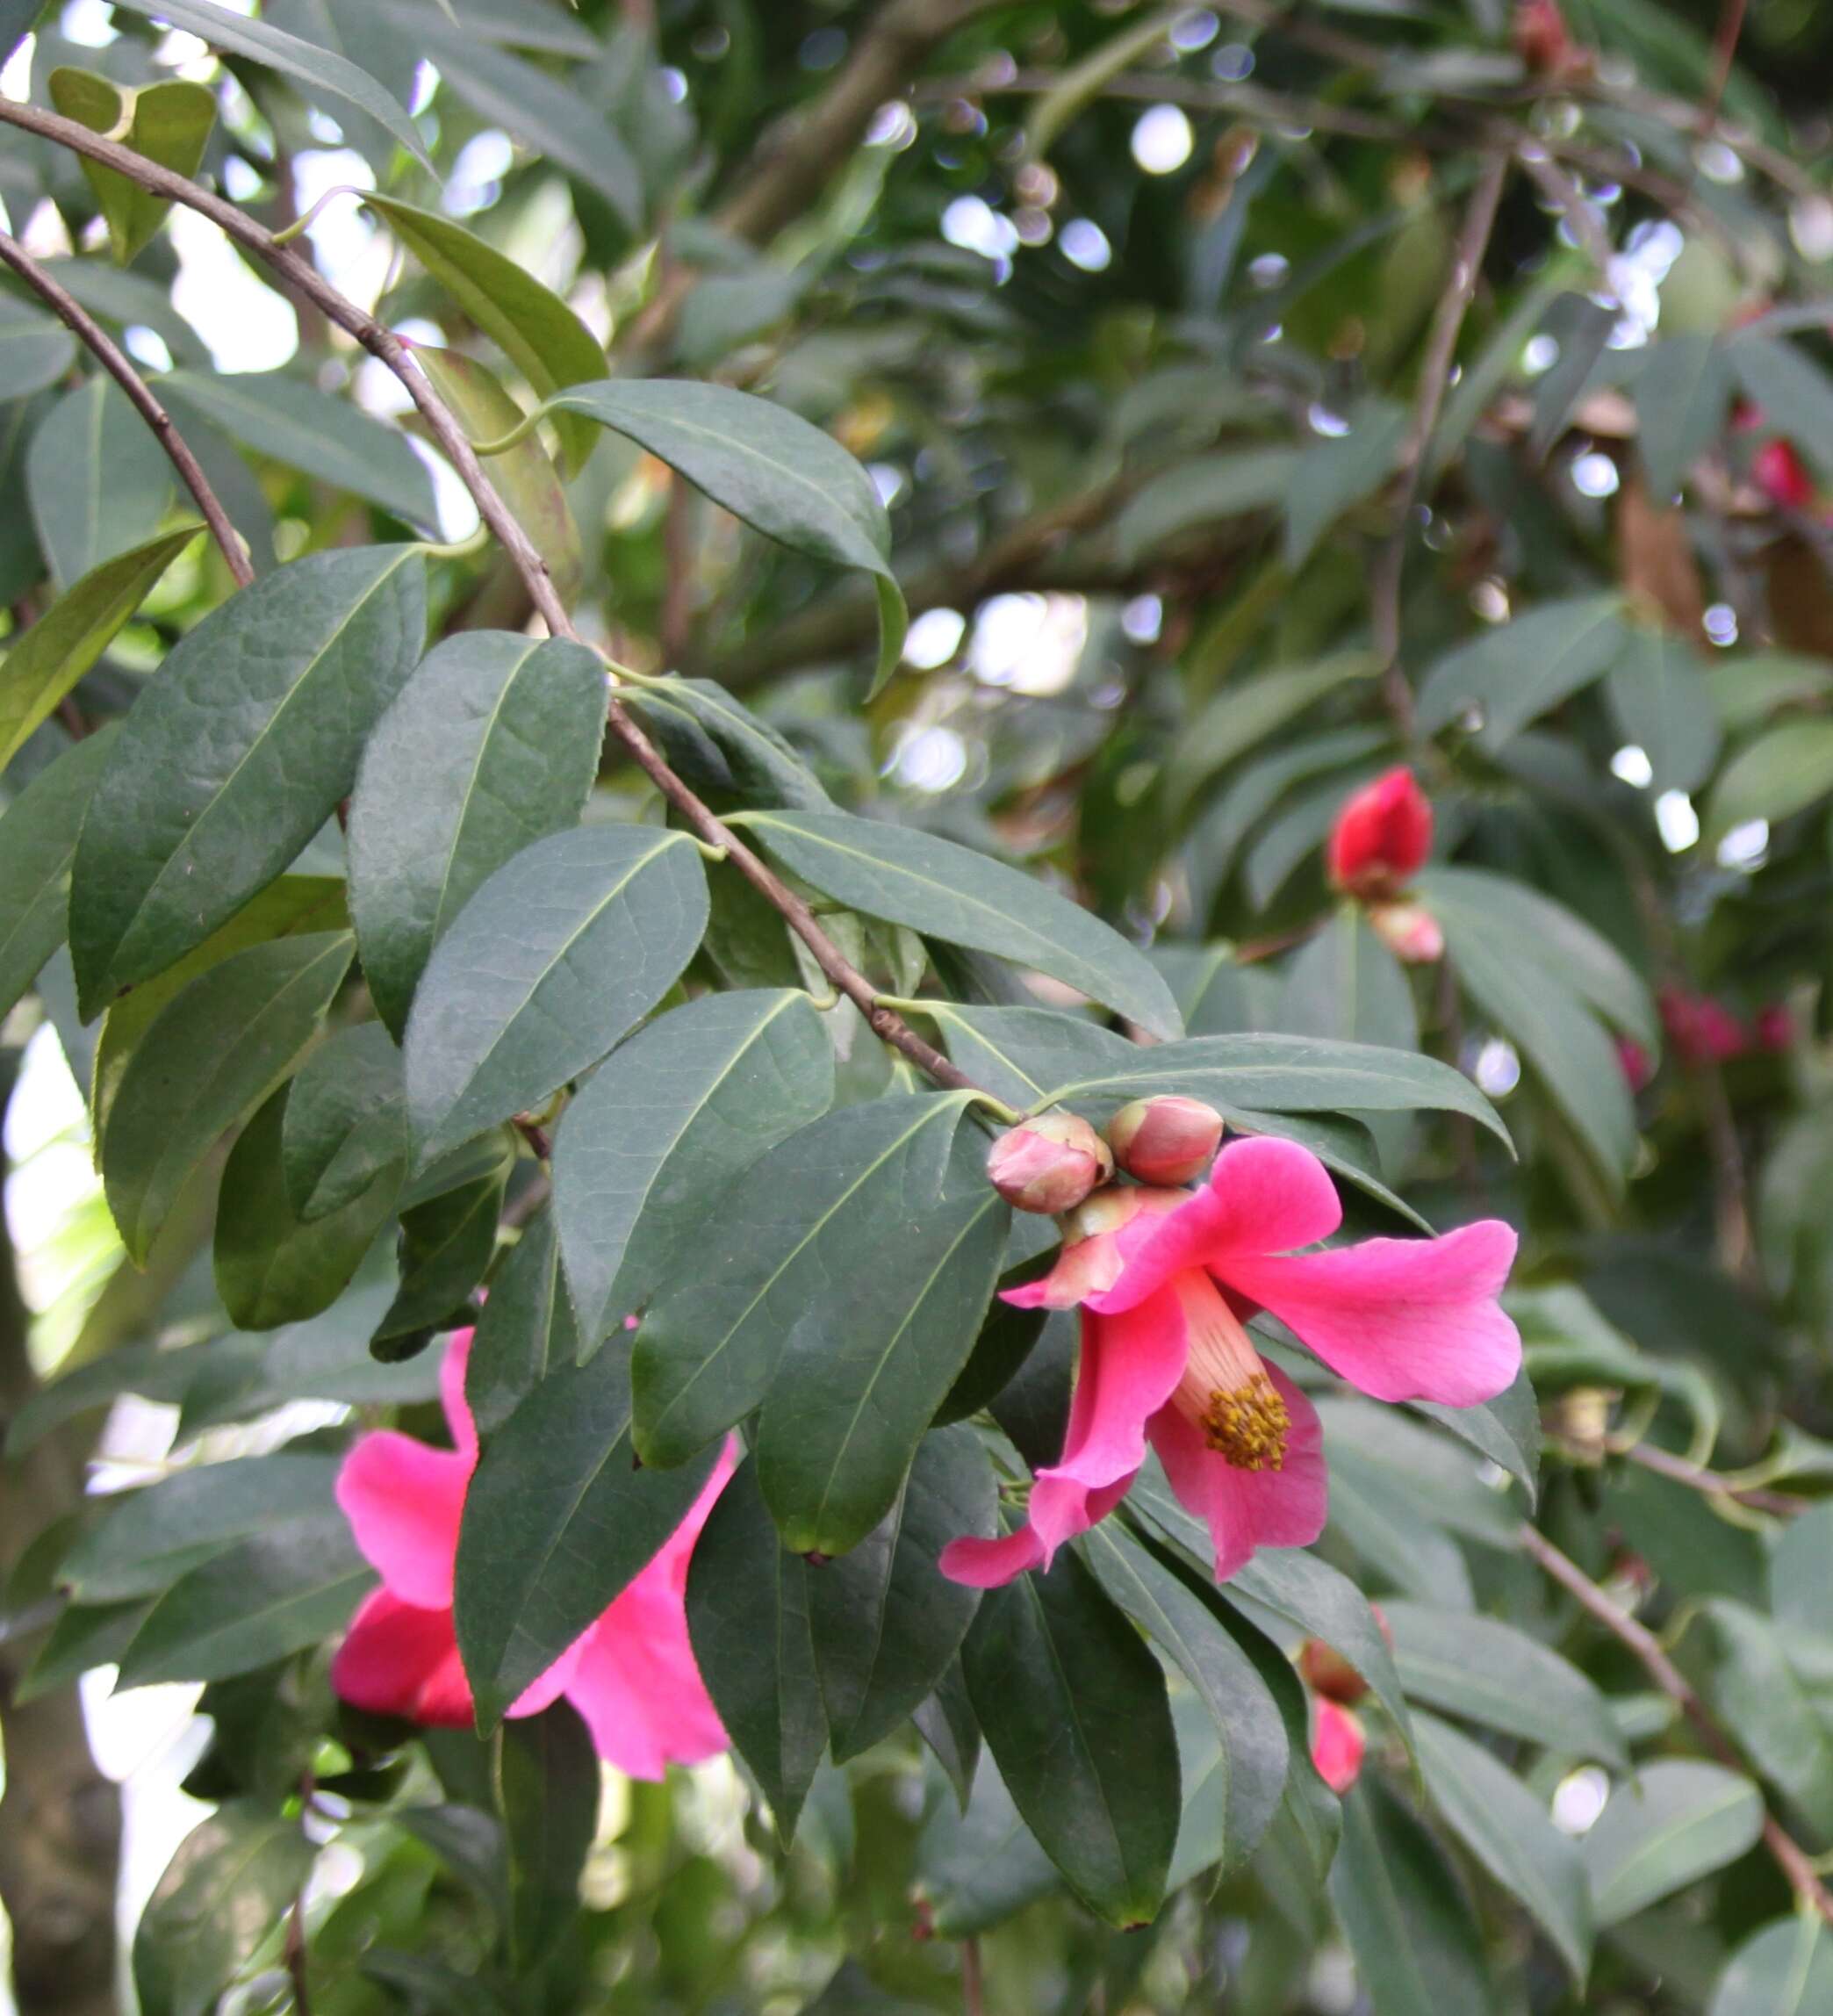 Image of Pitard's Camellia